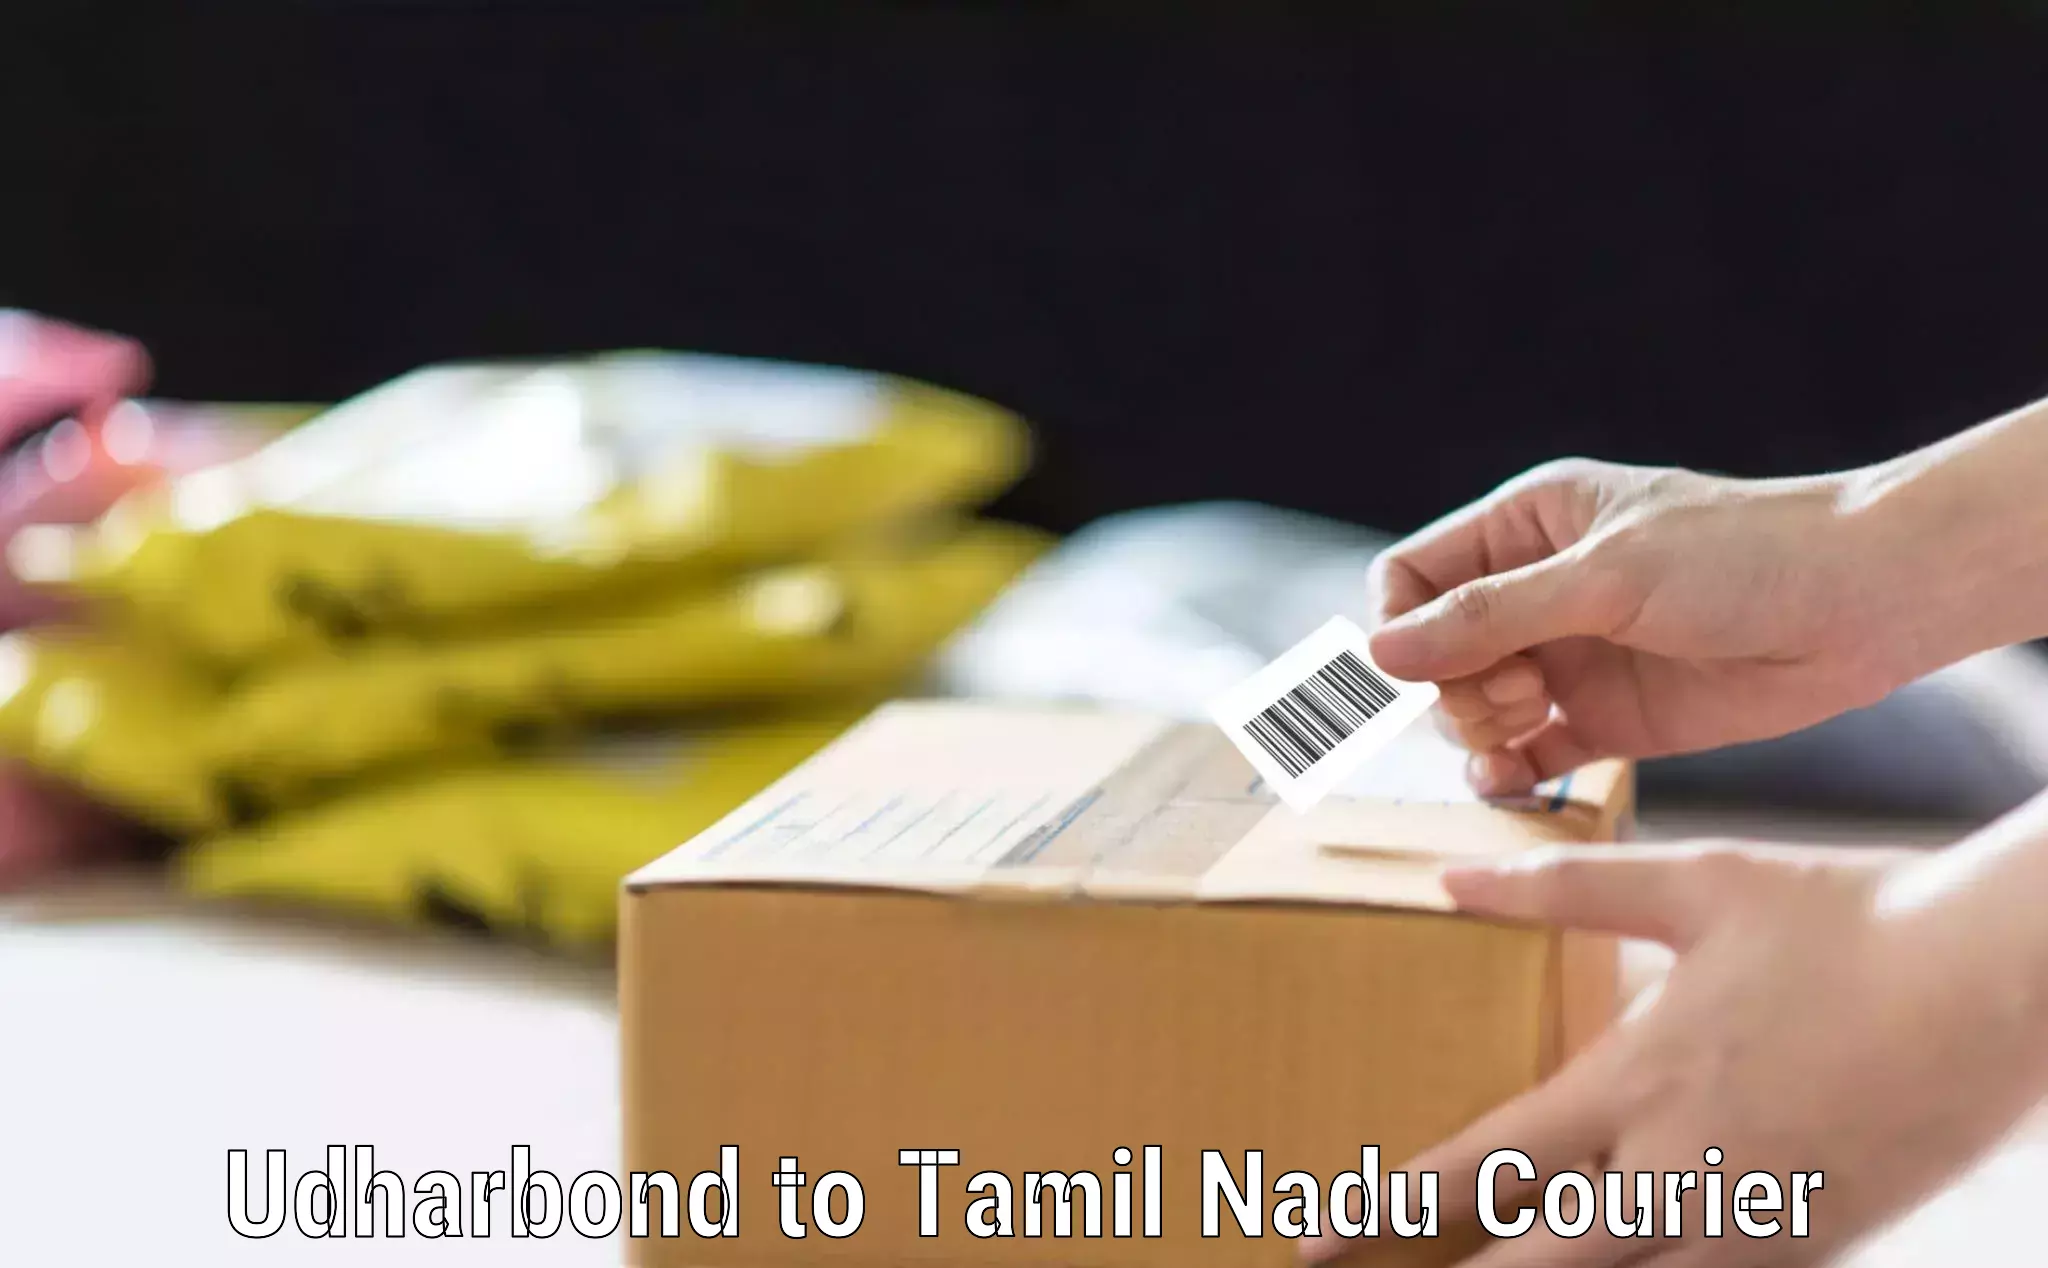 Nationwide luggage courier Udharbond to Tamil Nadu